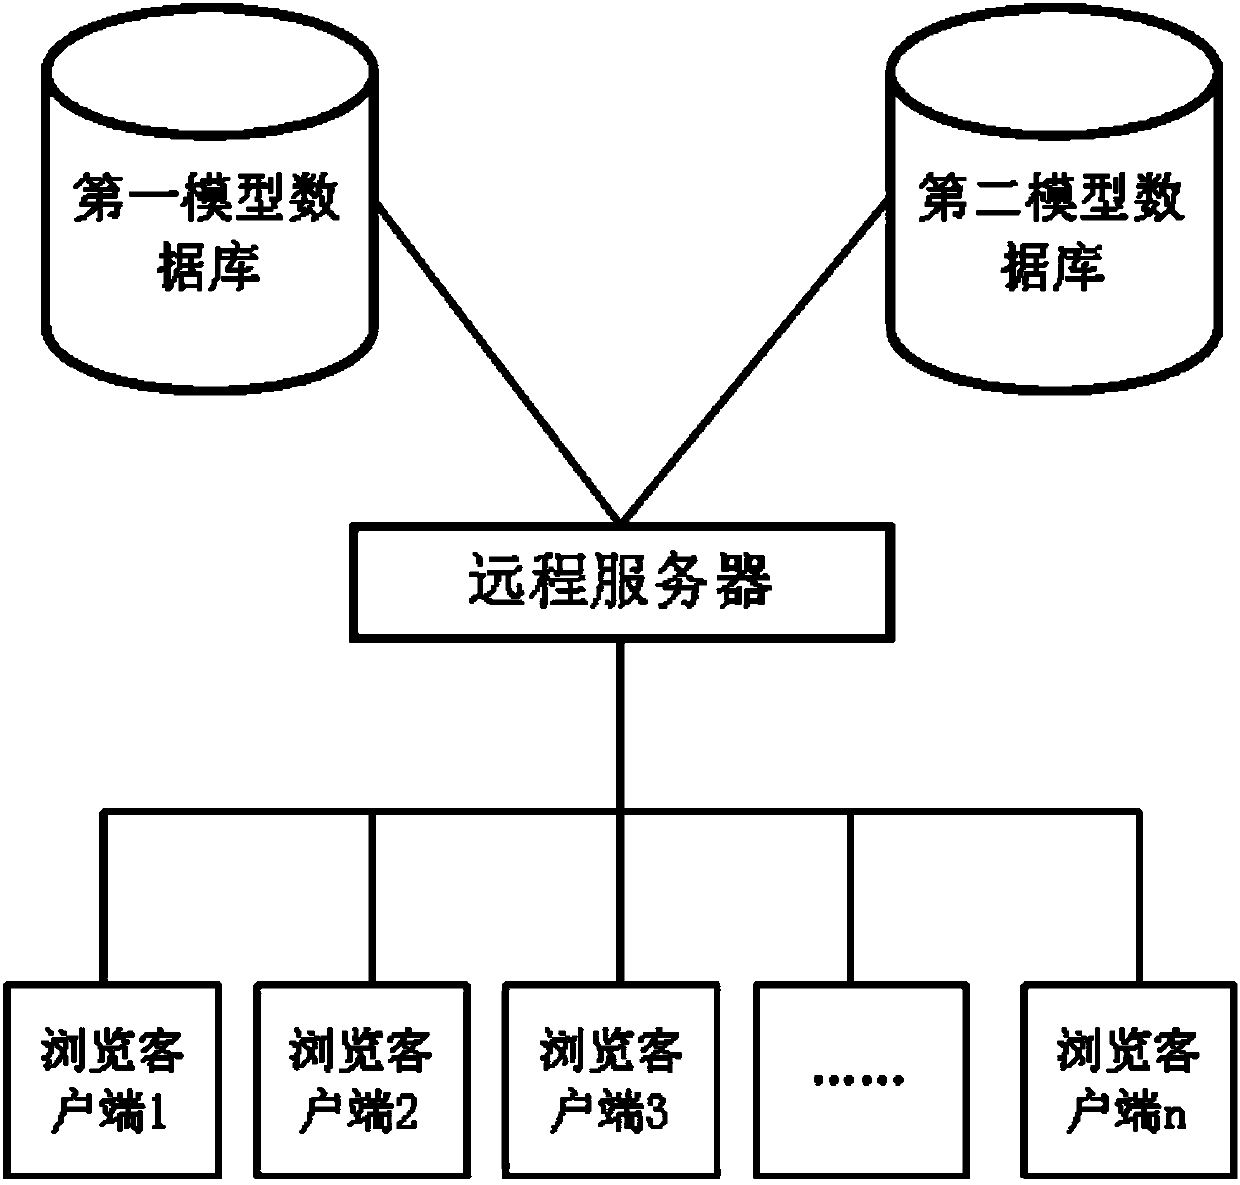 Three-dimensional model loading method